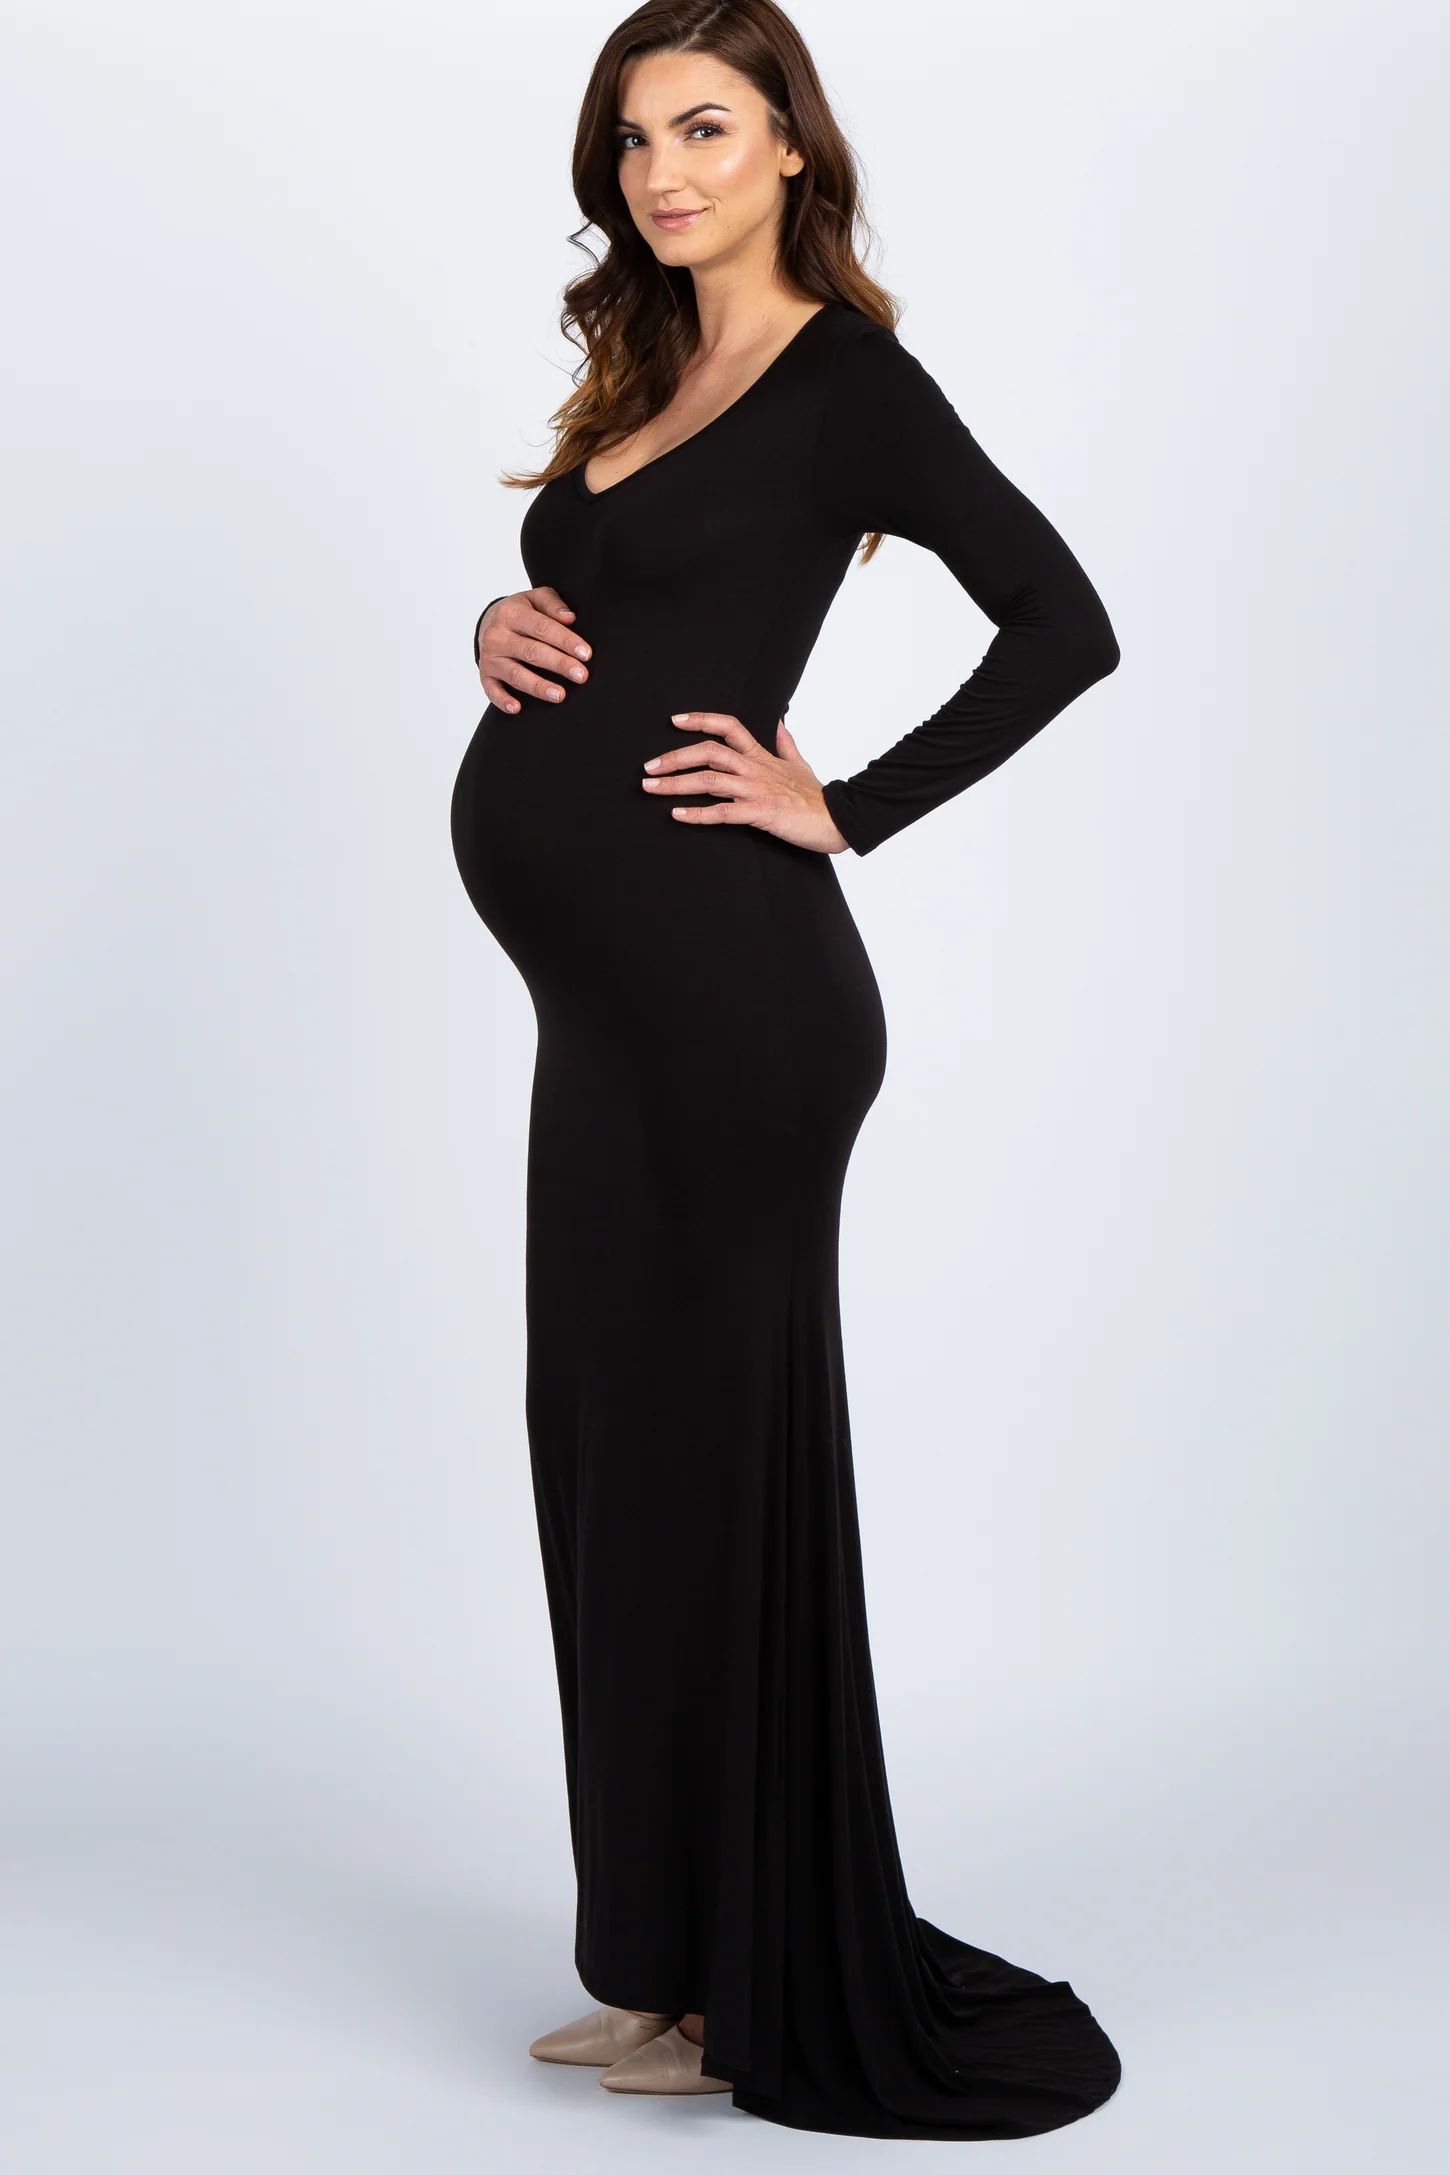 PinkBlush Black Long Sleeve Photoshoot Maternity Gown/Dress | PinkBlush Maternity